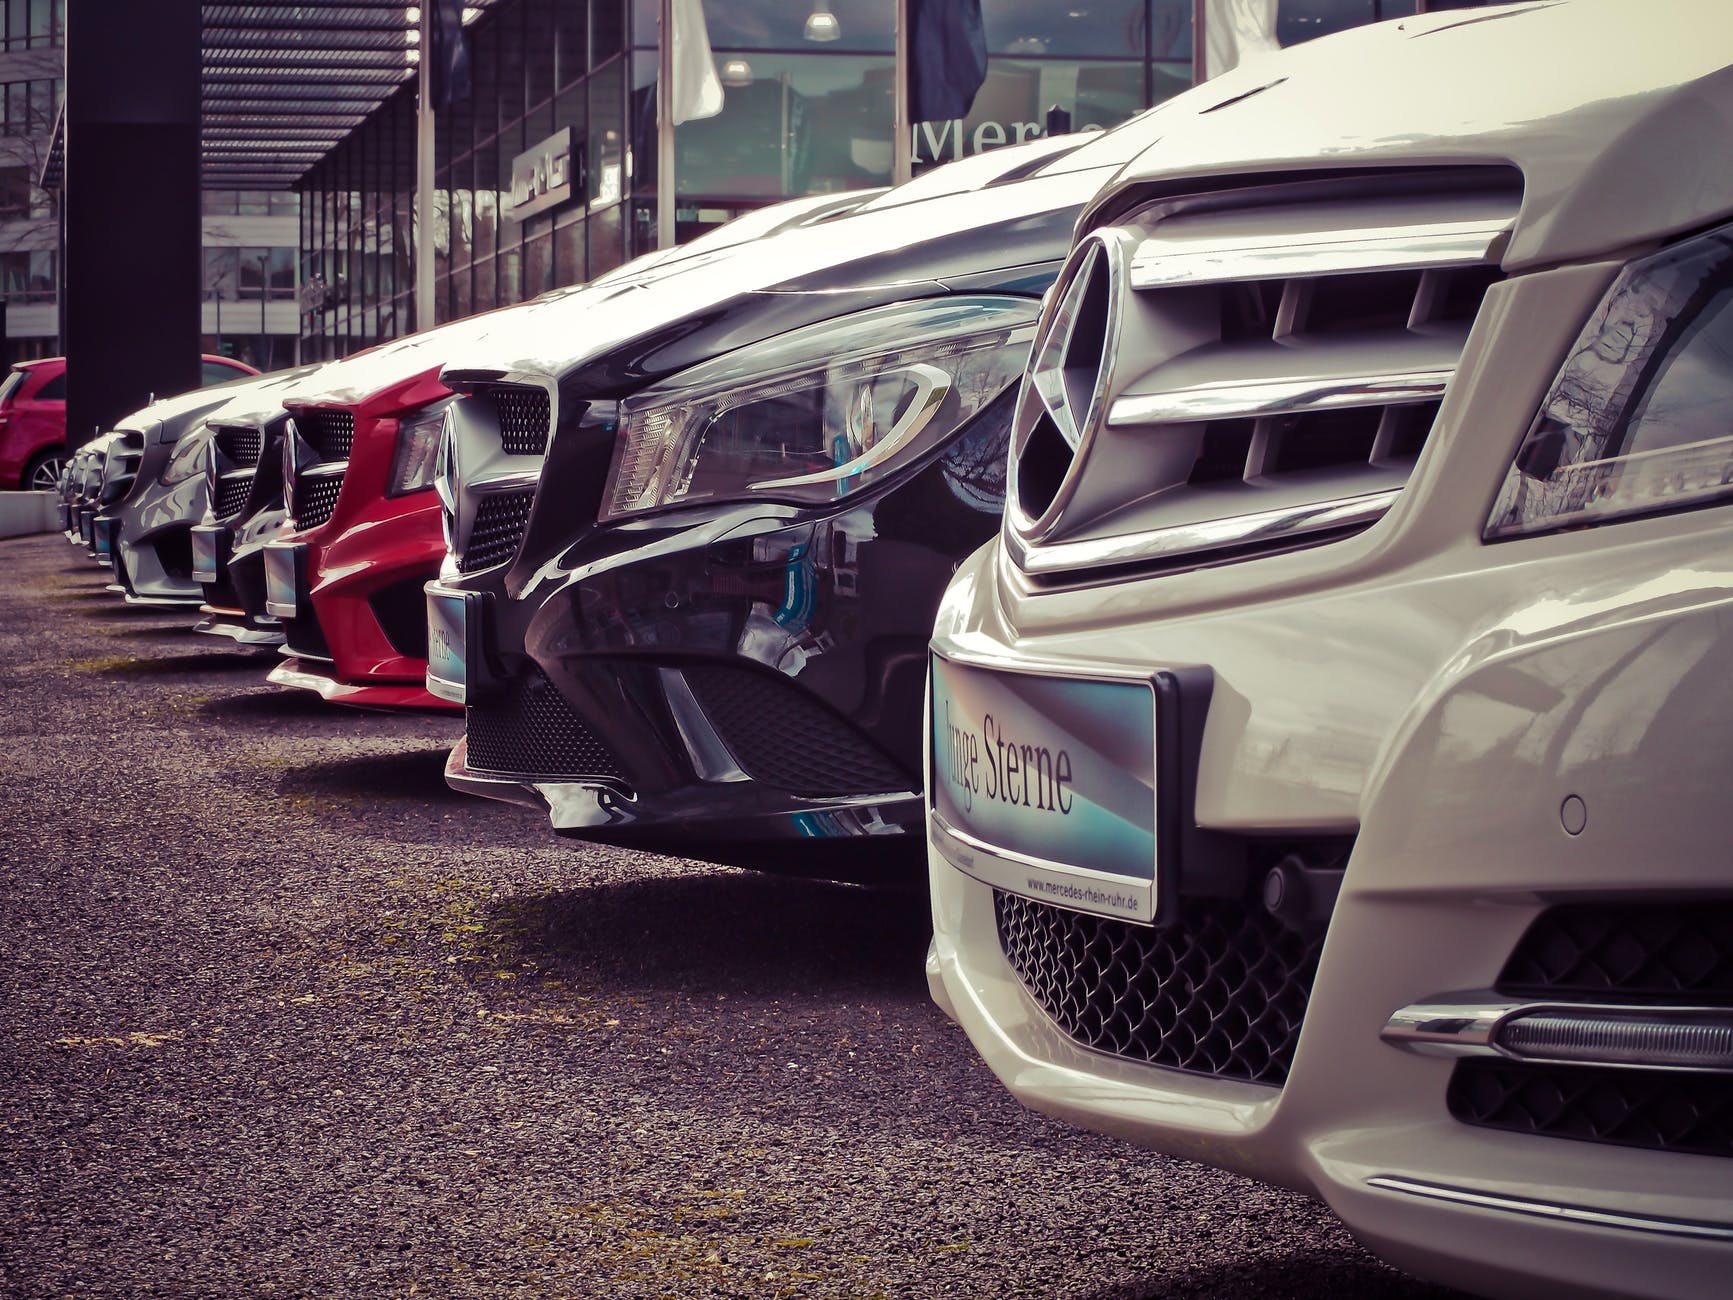 A row of luxurious cars | Source: Pixabay